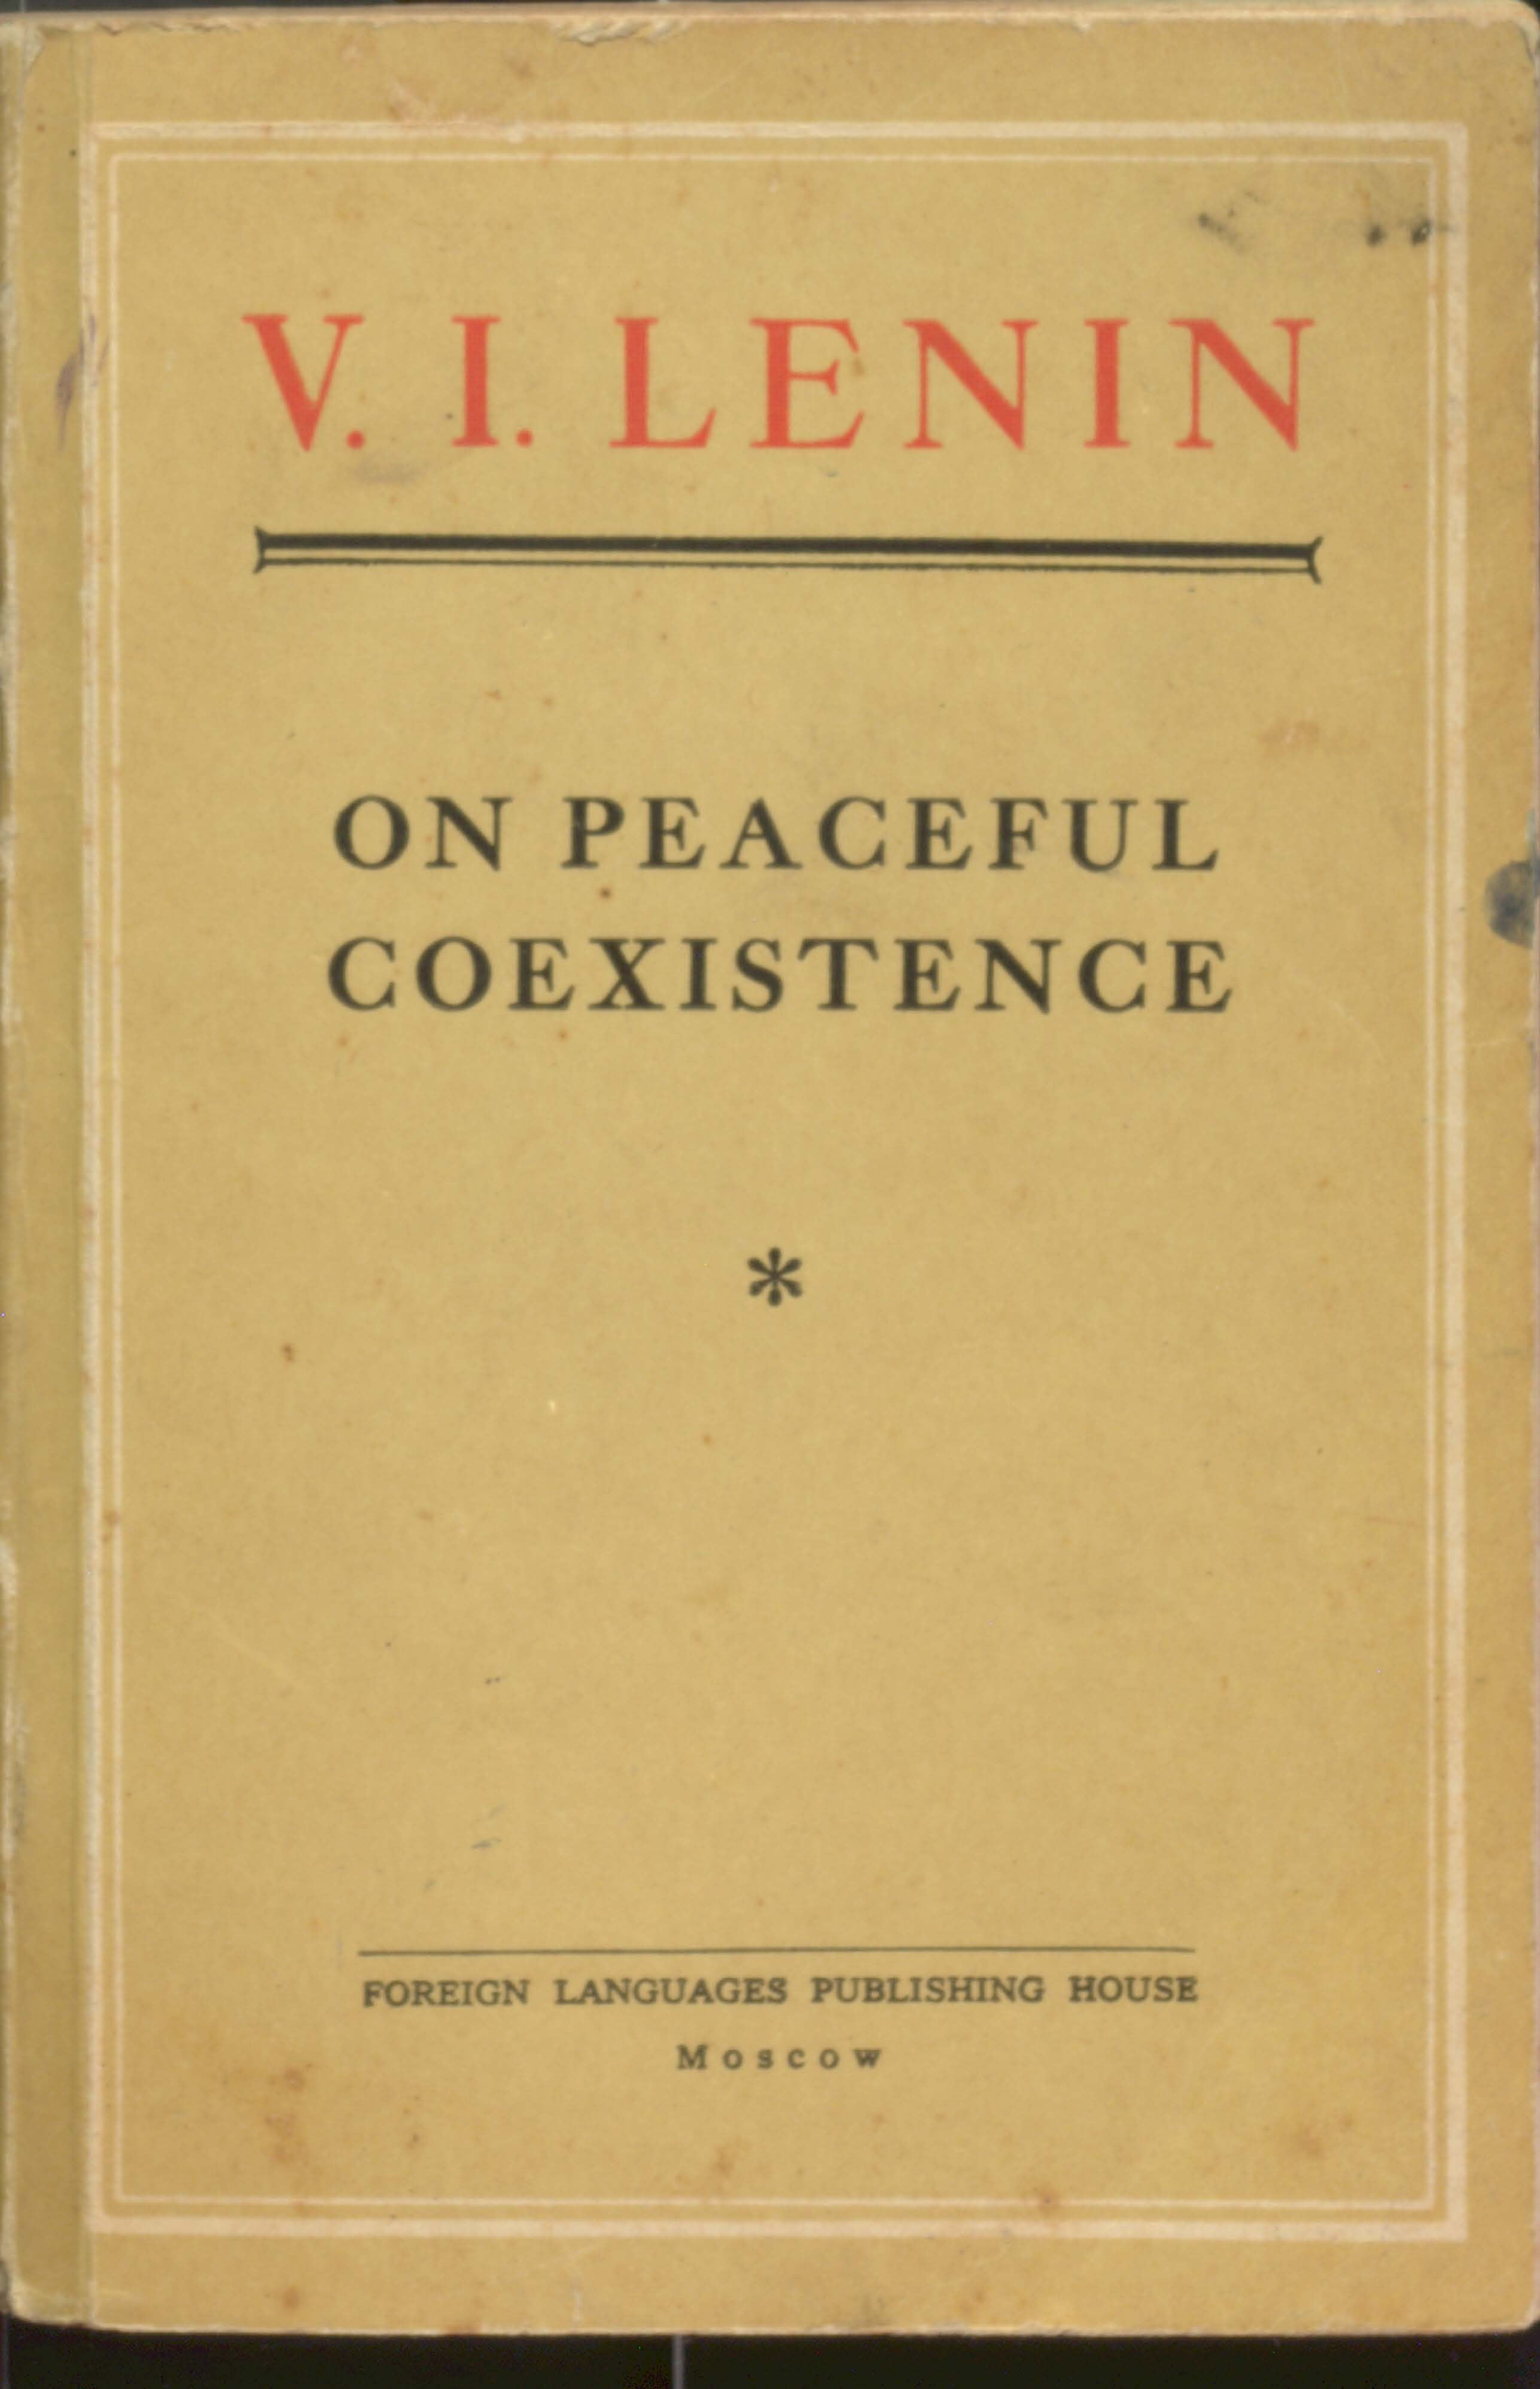 V.l.Lenin on peaceful coexistence